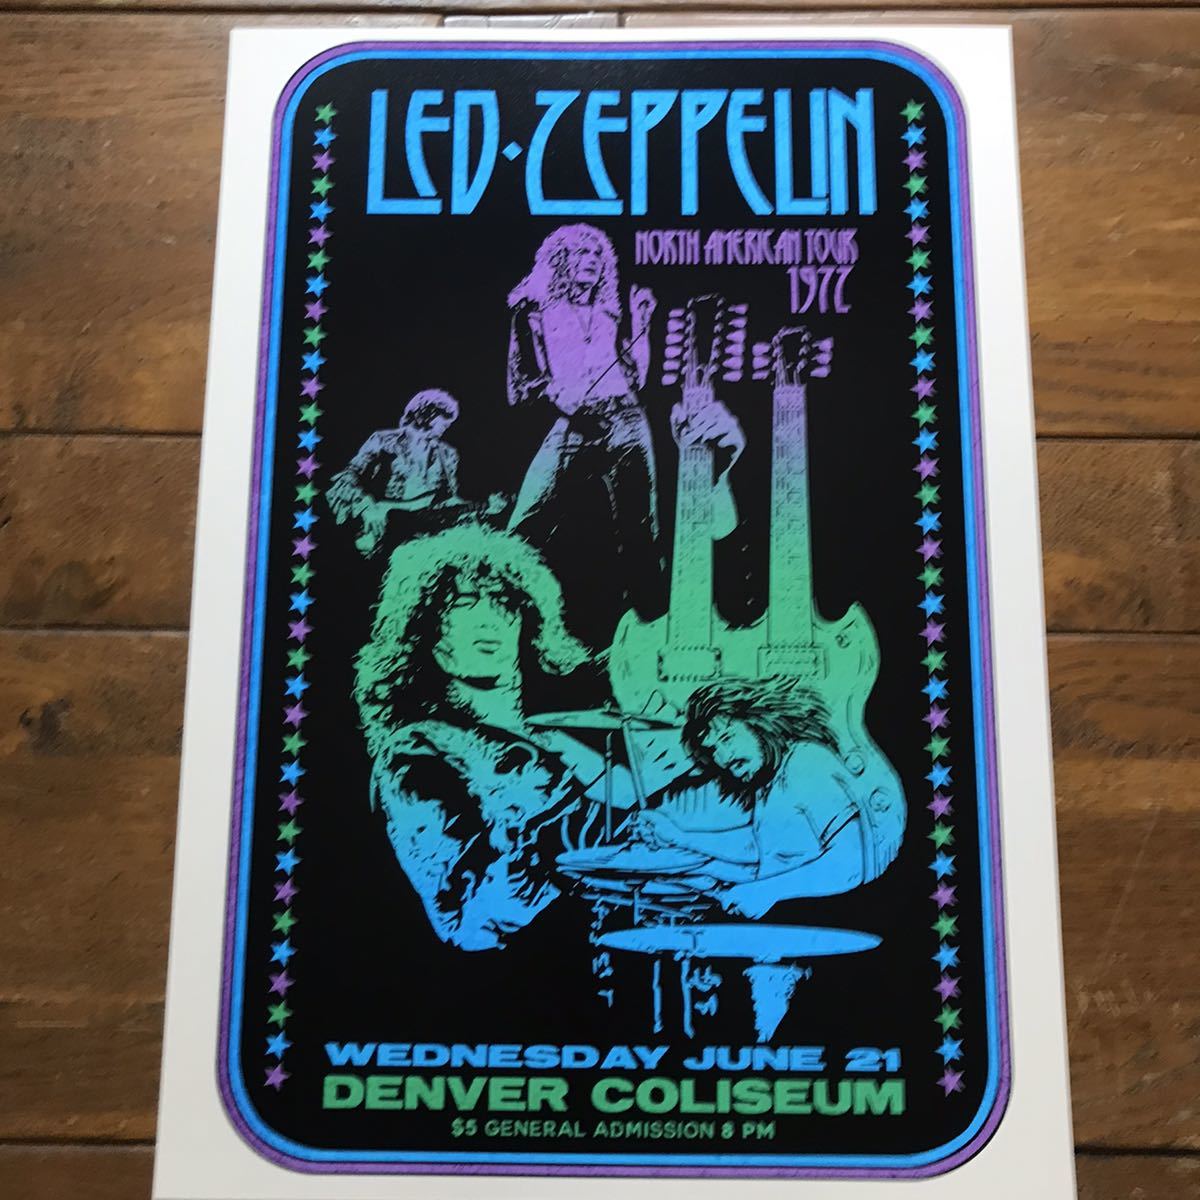  постер * красный *tsepe Lynn (Led Zeppelin)1972 Северная Америка Tour * Denver * концерт *ZEP/jimi-*peiji